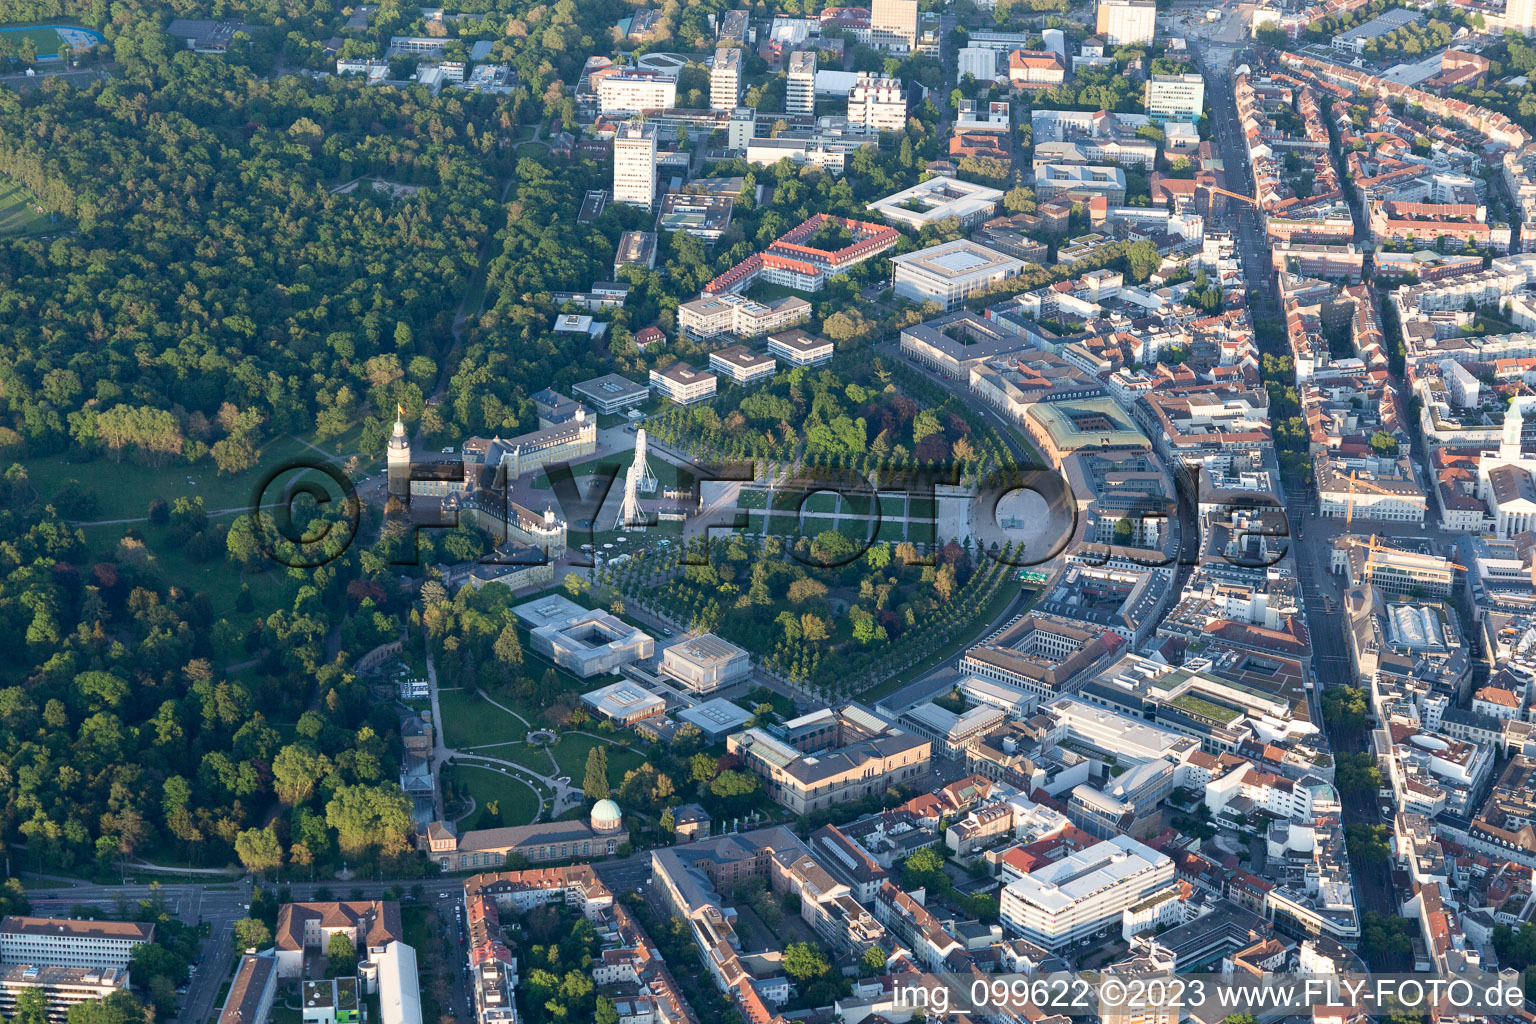 Aerial view of Kaiserstr, Schloßplatz in the district Innenstadt-West in Karlsruhe in the state Baden-Wuerttemberg, Germany